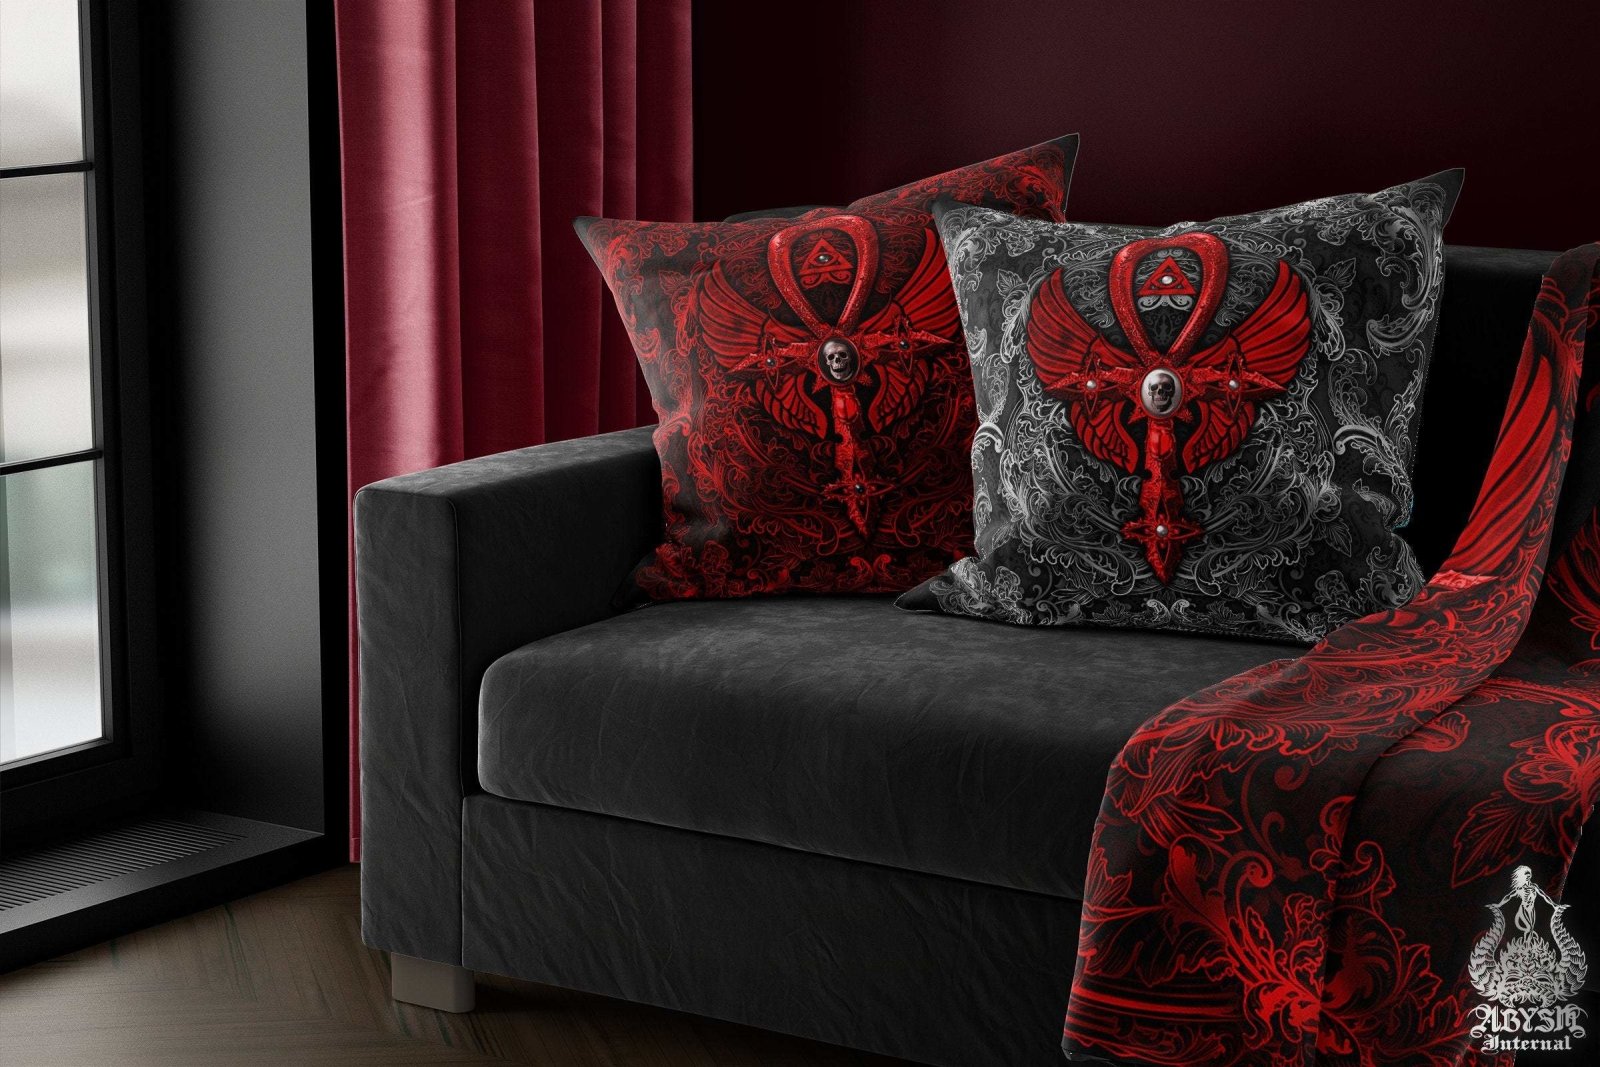 Gothic Throw Pillow, Decorative Accent Cushion, Goth Room Decor, Dark Art, Alternative Home - Ankh Cross, Dark bloody Red - Abysm Internal